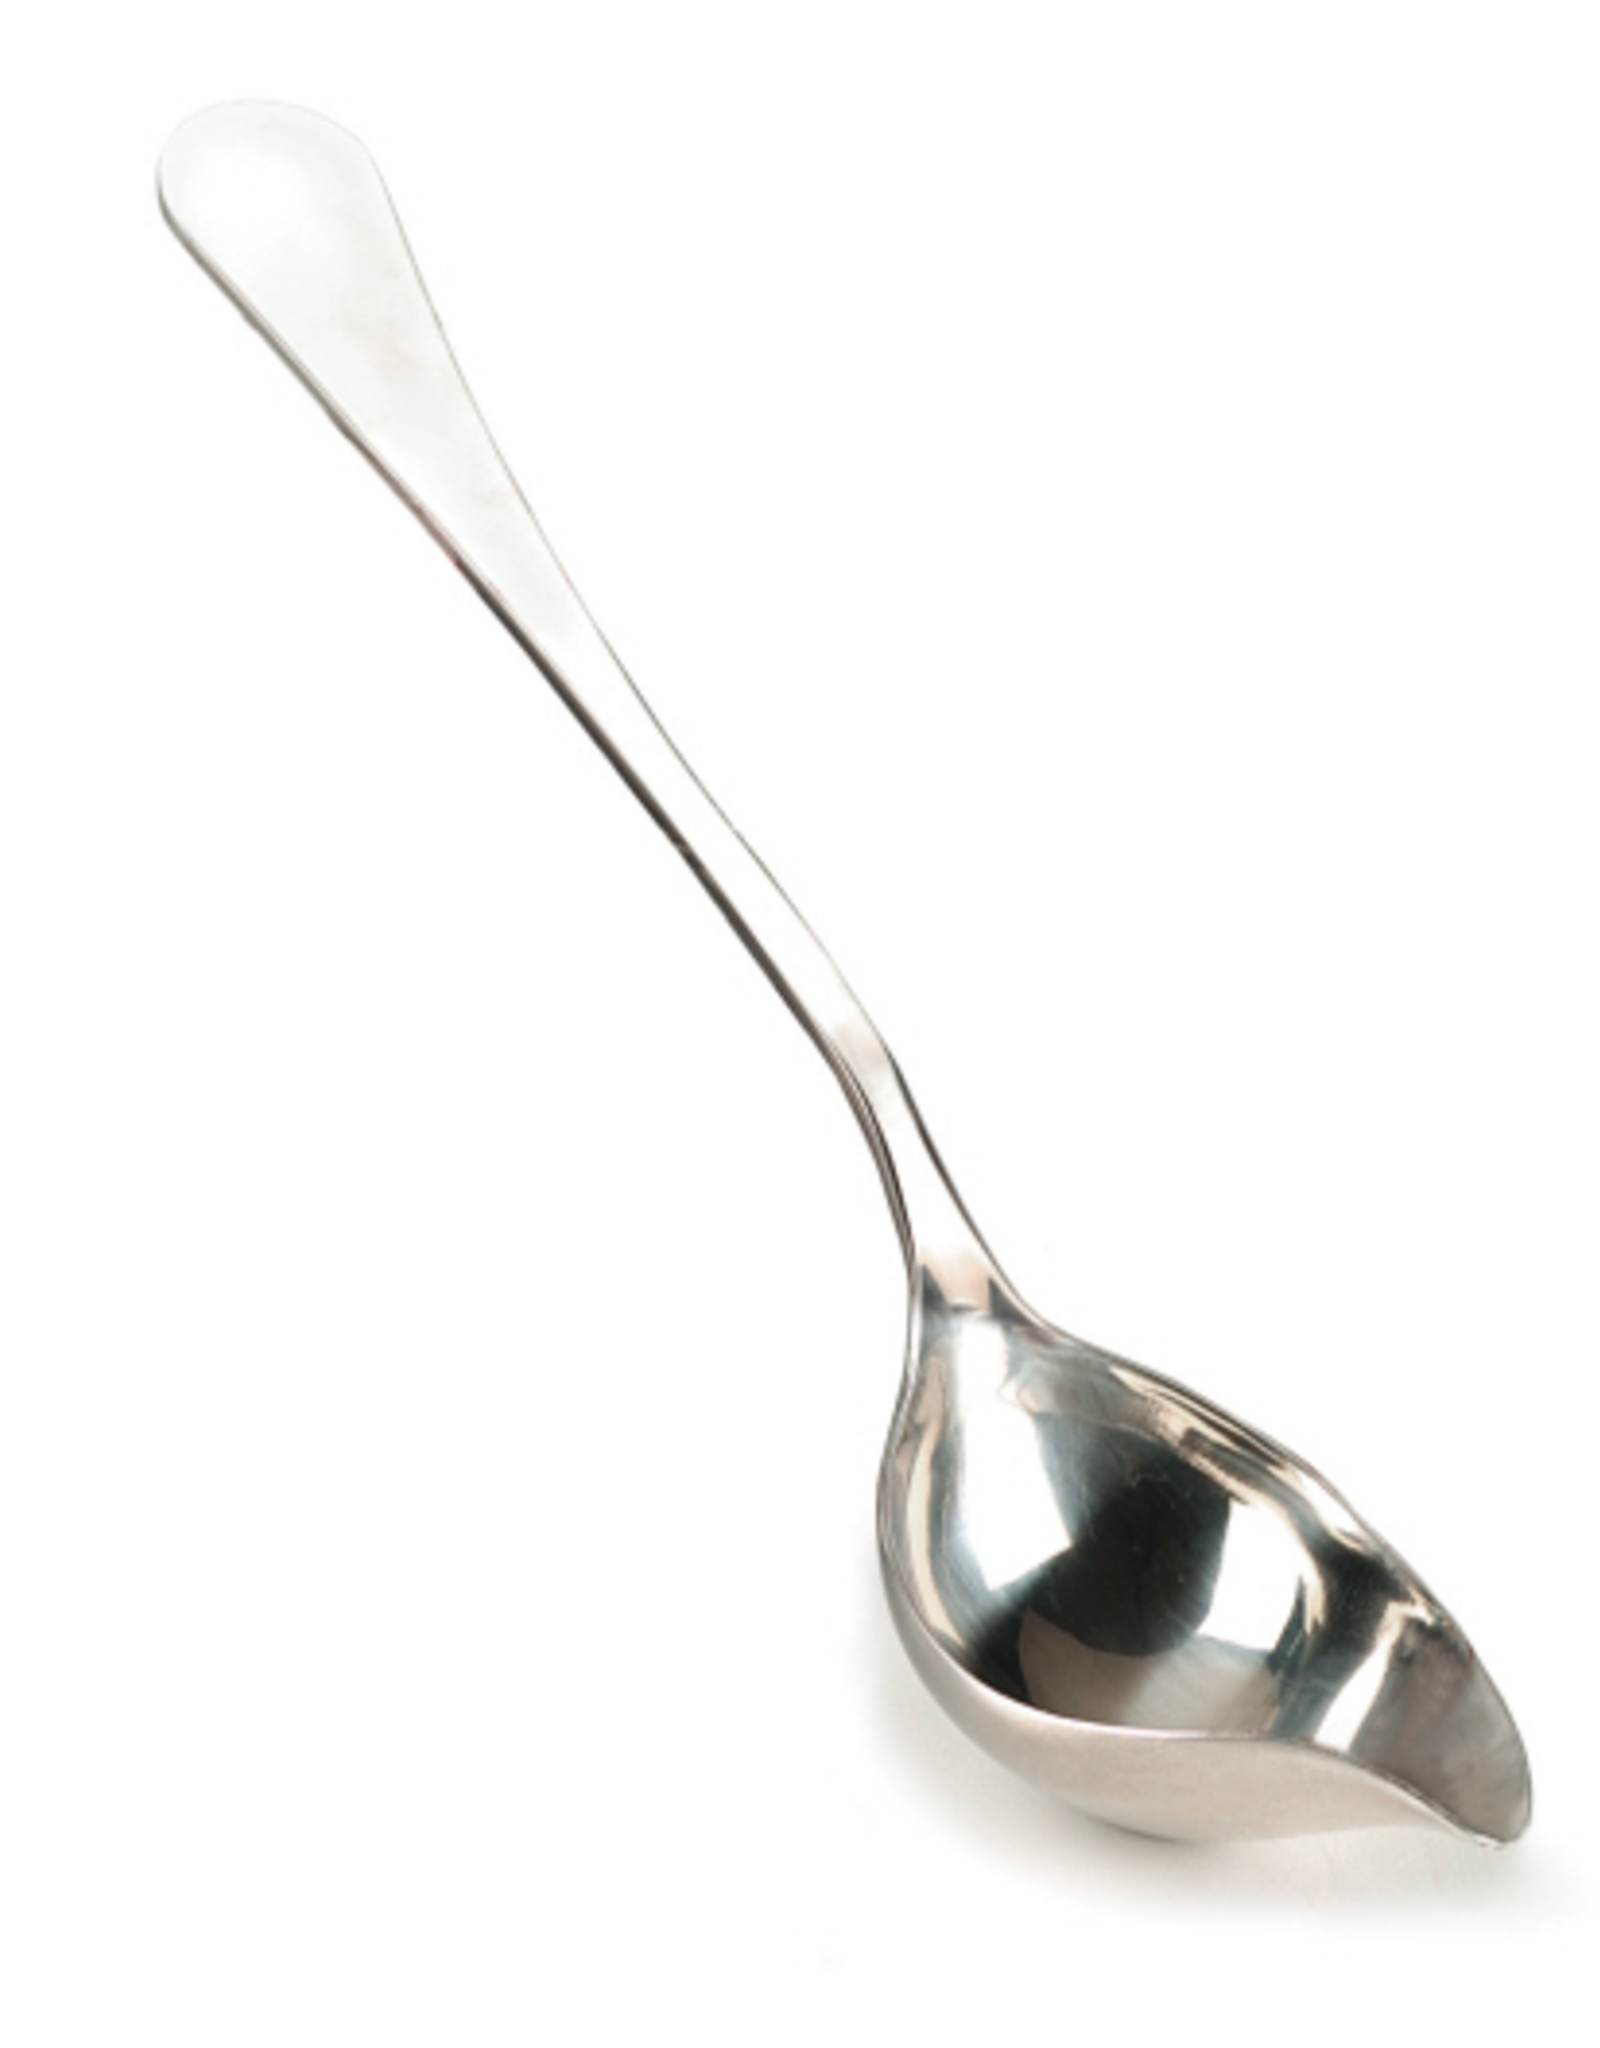 Drizzle Spoon